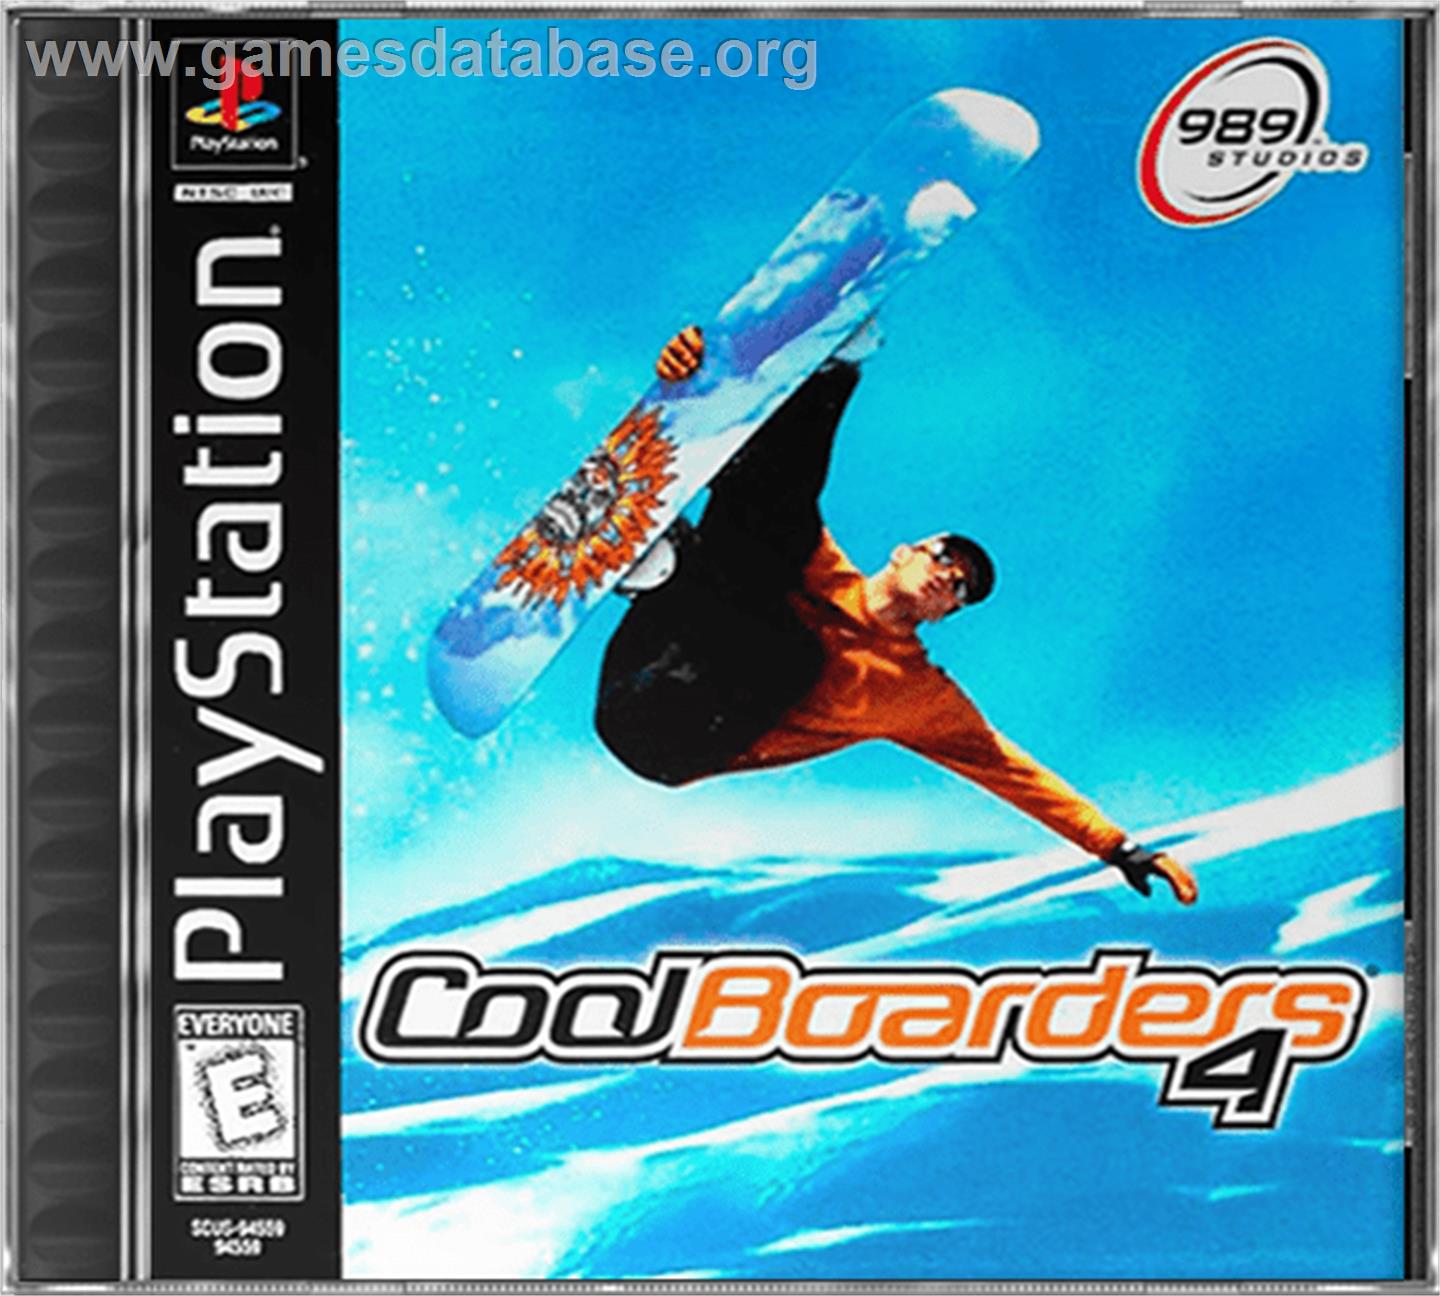 Cool Boarders 4 - Sony Playstation - Artwork - Box